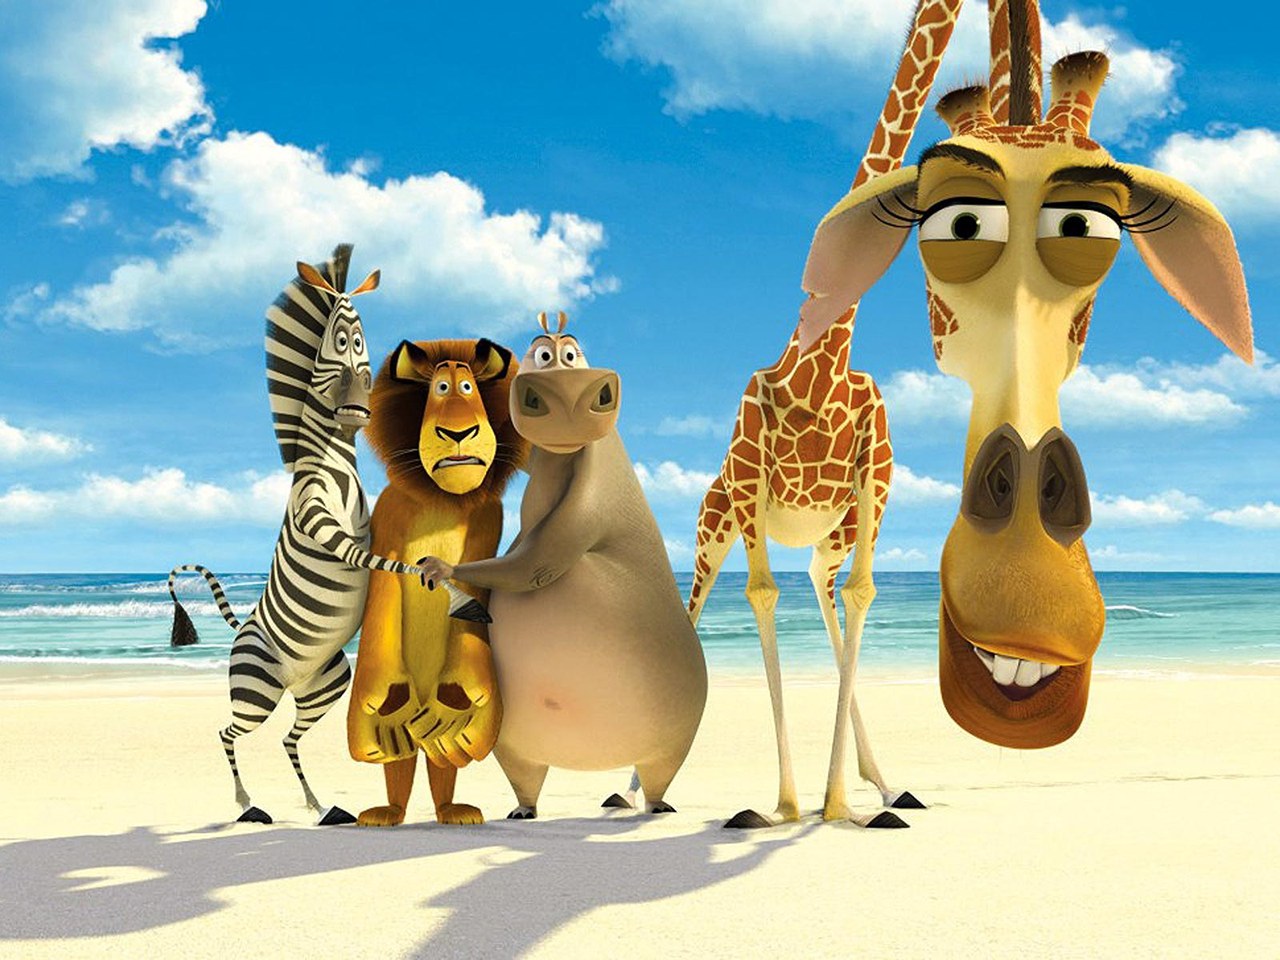 "Madagascar" desktop wallpaper number 2 (1280 x 960 pixels)